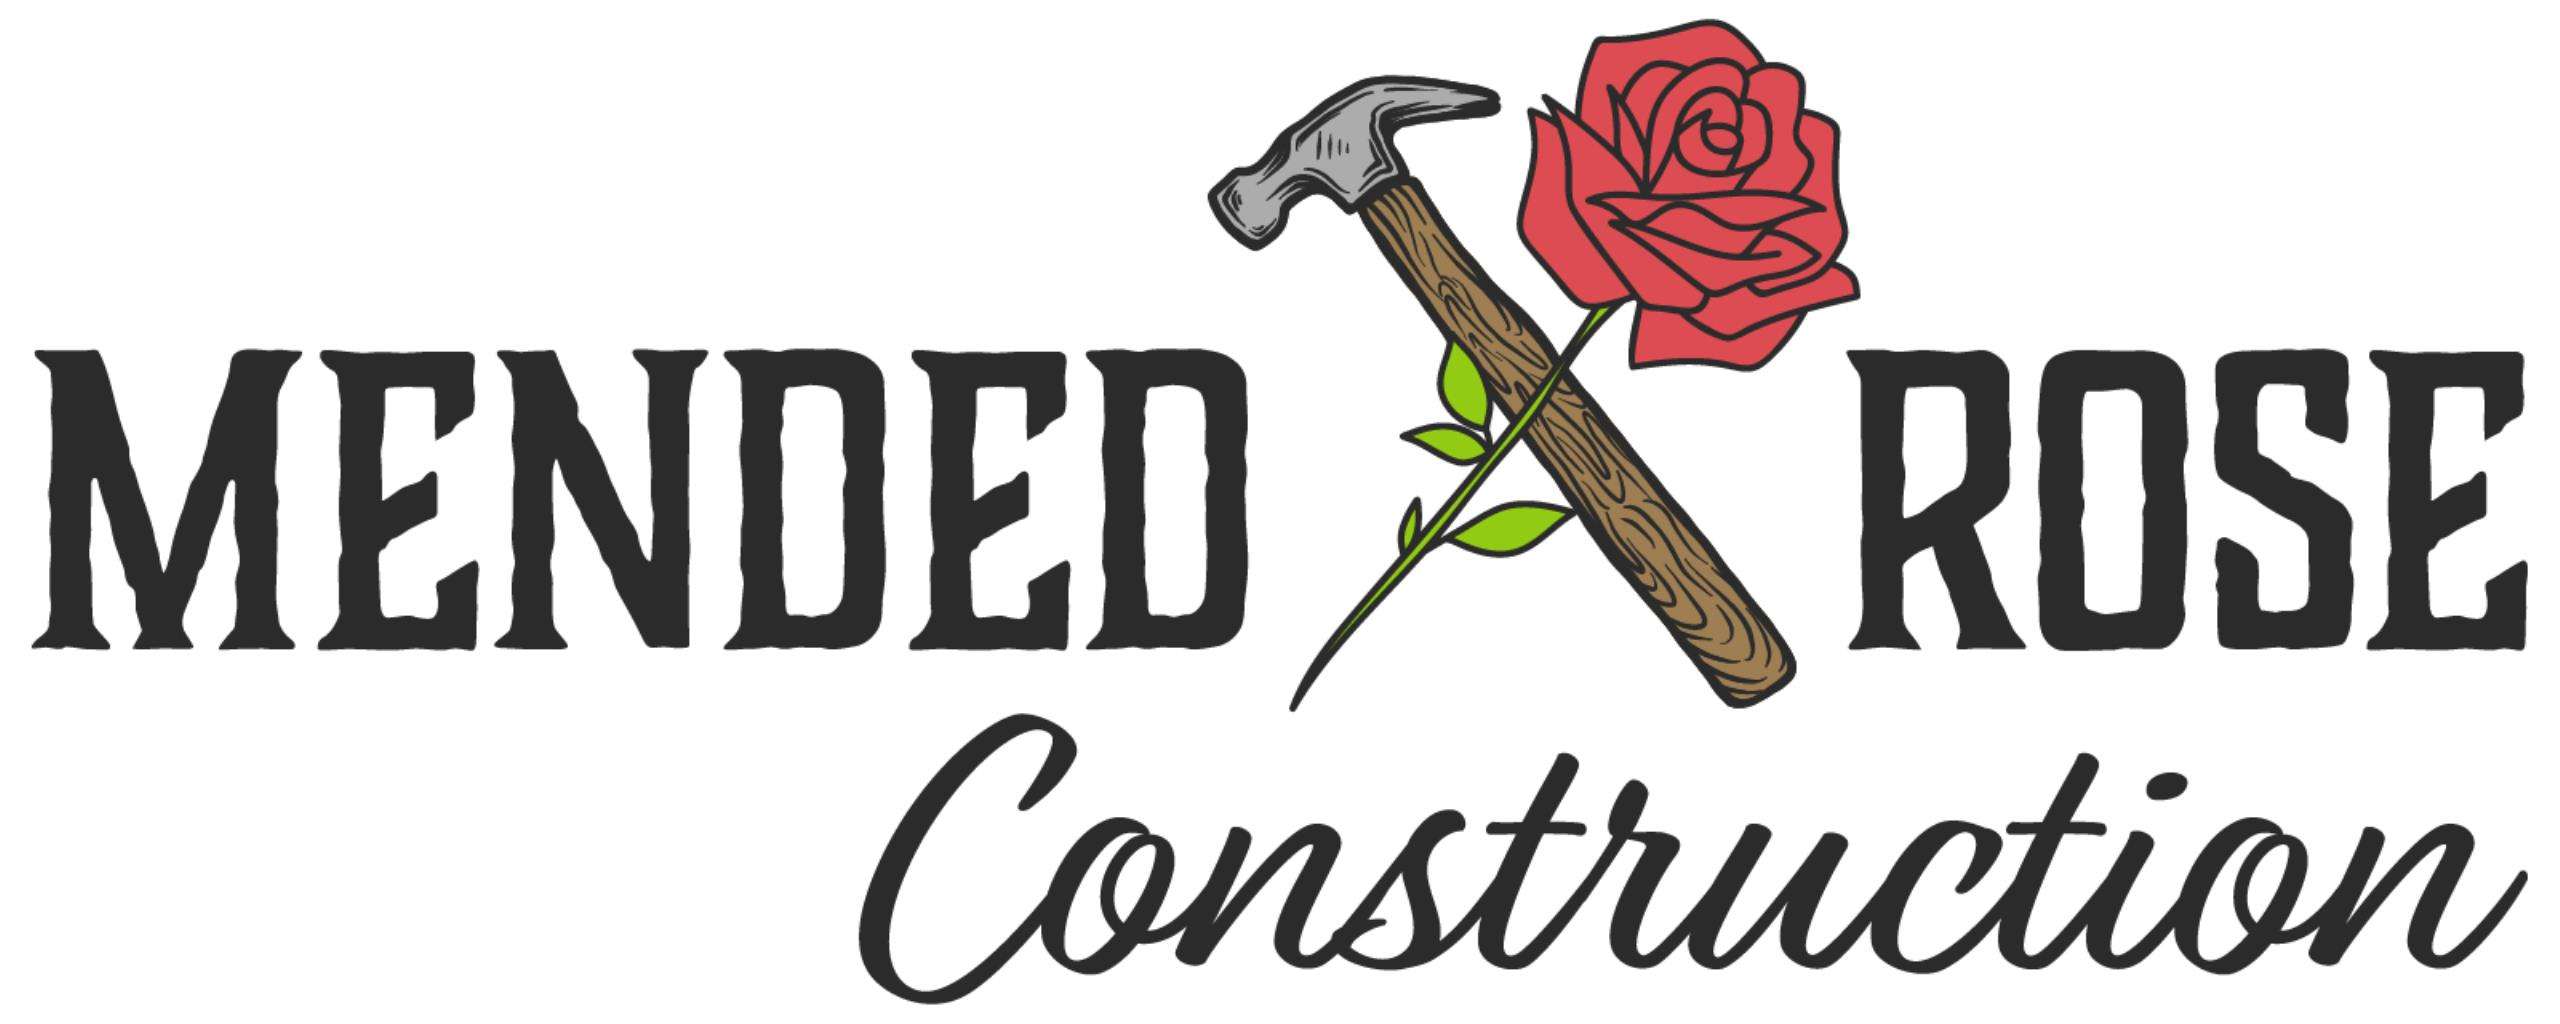 Mended Rose Construction  Logo